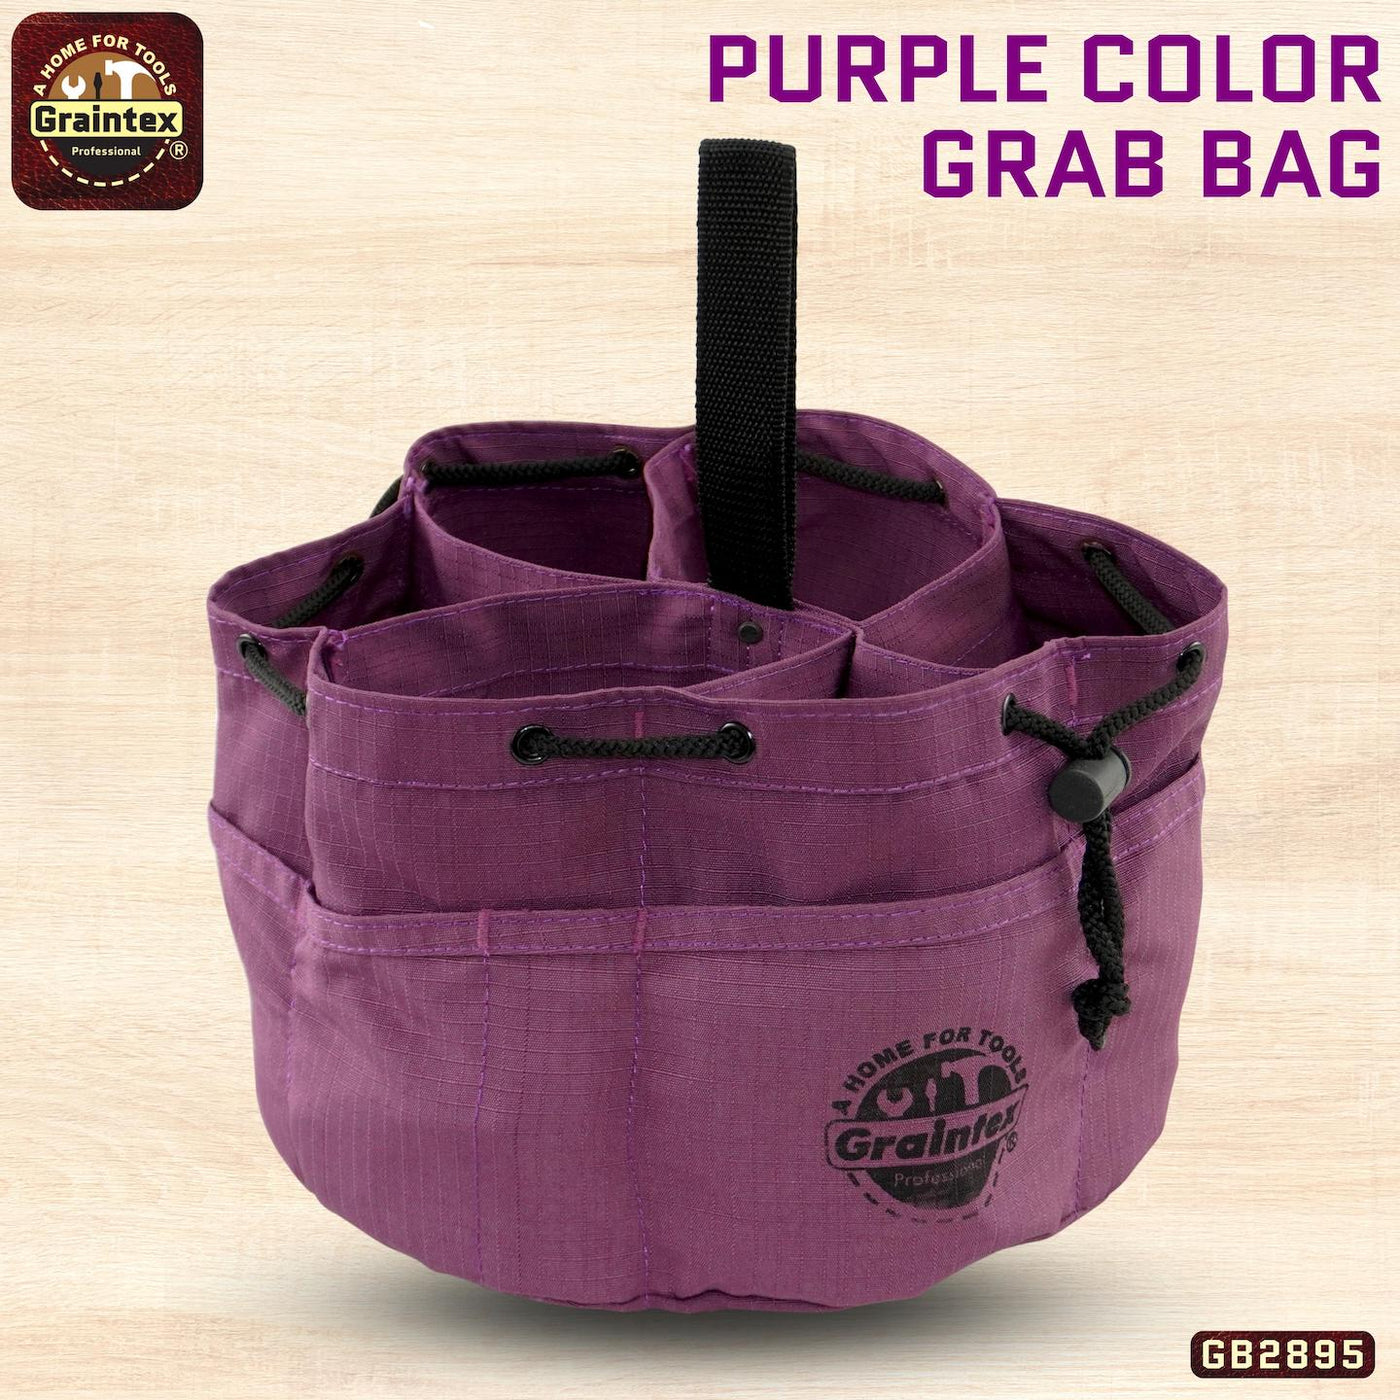 GB2895 :: Grab Bag Purple Color Rip-stop Canvas 18 Pockets Drawstring Closure